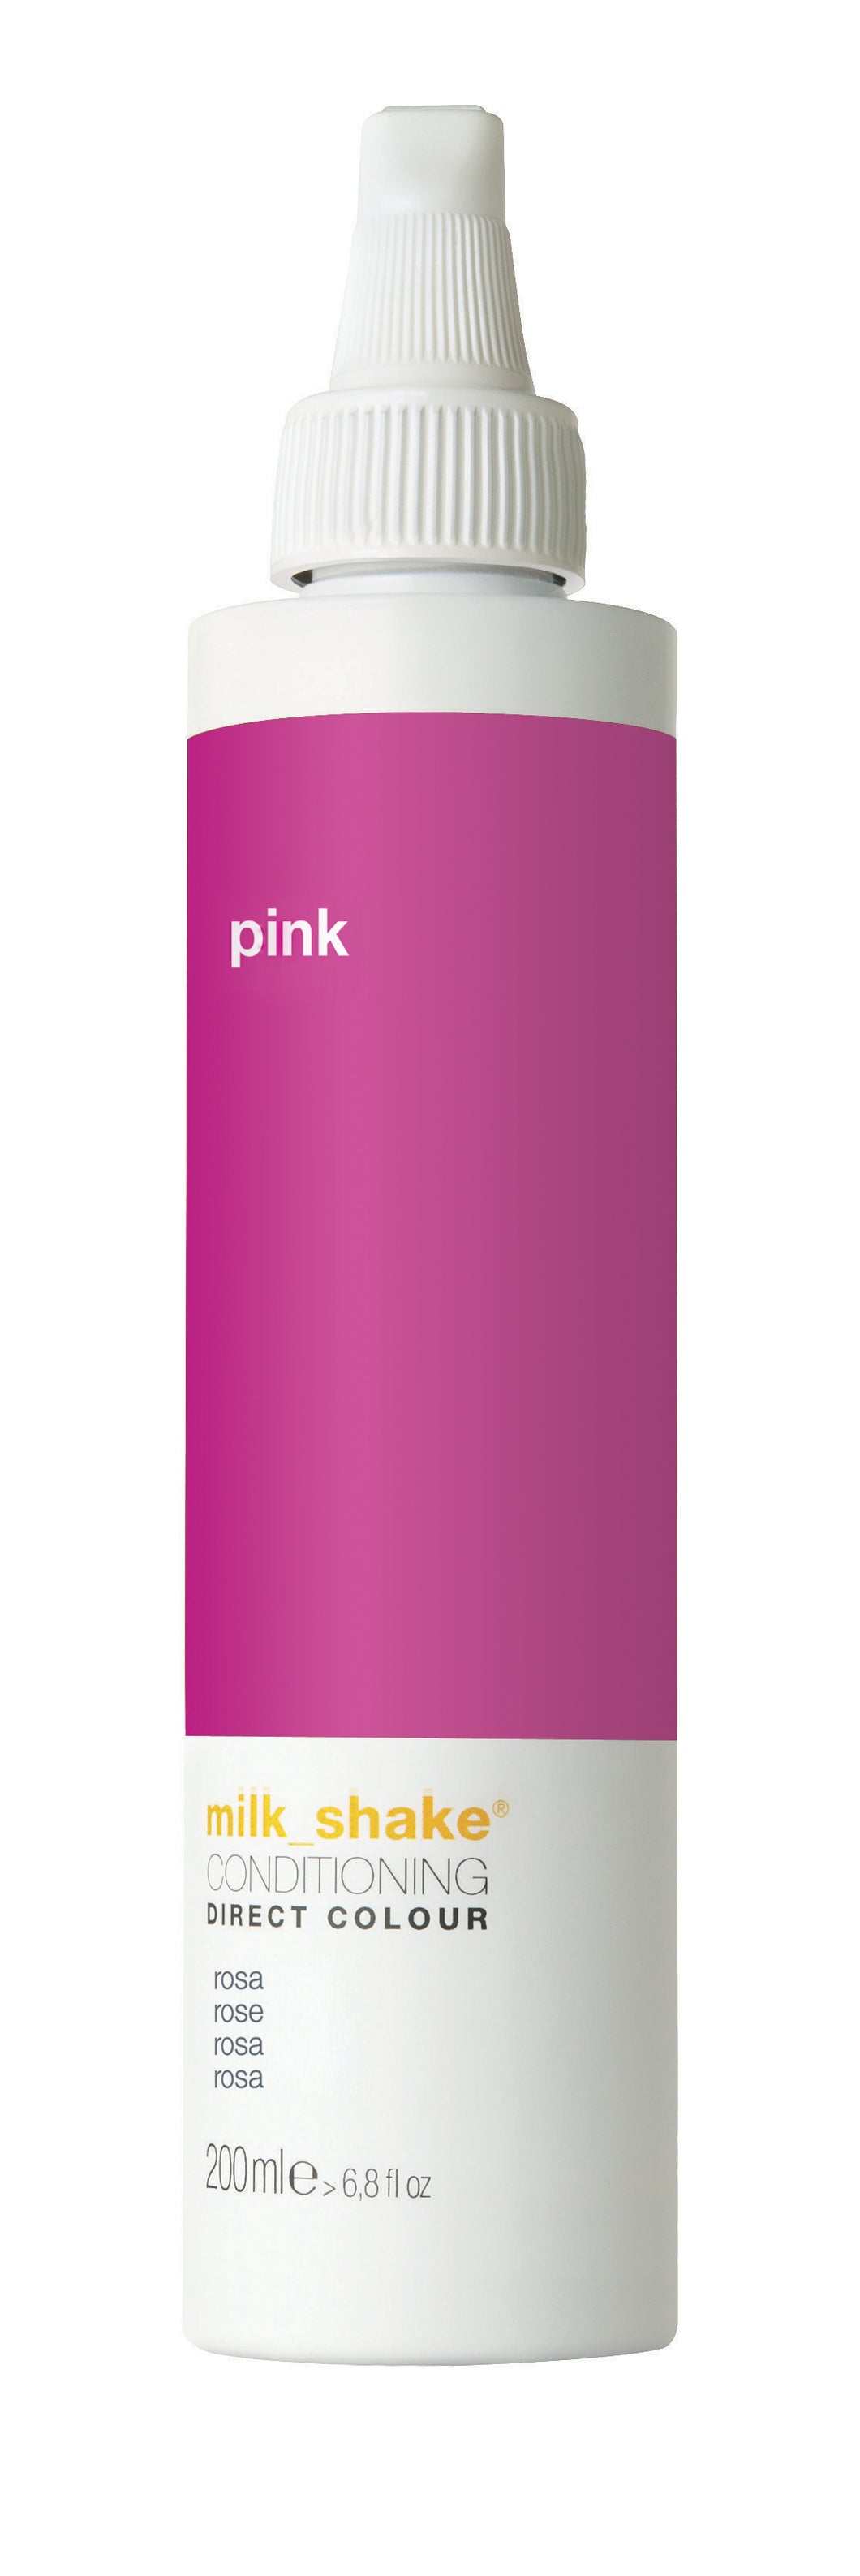 milk_shake direct colour pink